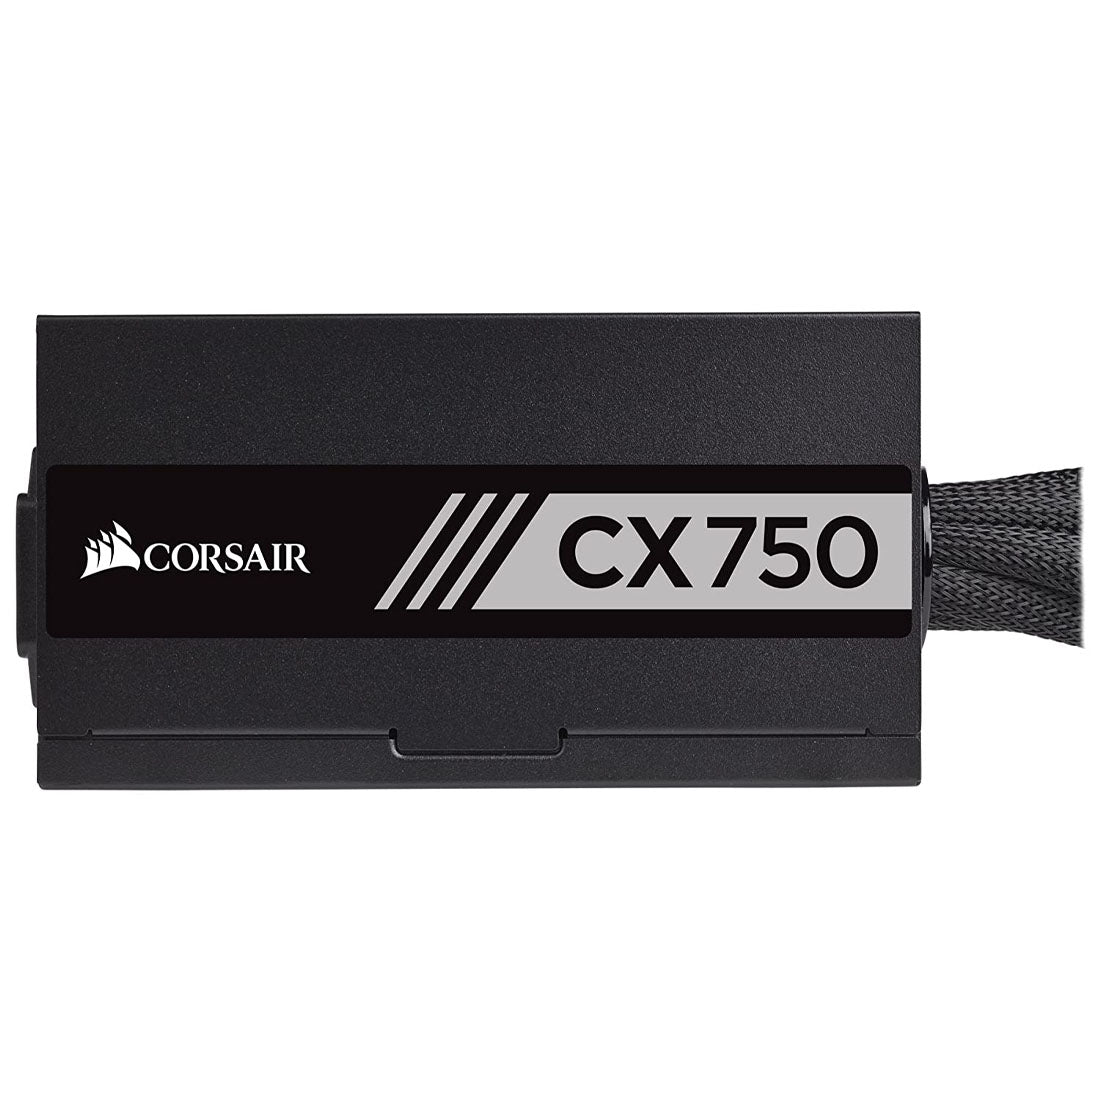 CORSAIR CX750M 750W Semi-Modular 80 Plus Bronze SMPS Power Supply with 120mm Silent Fan